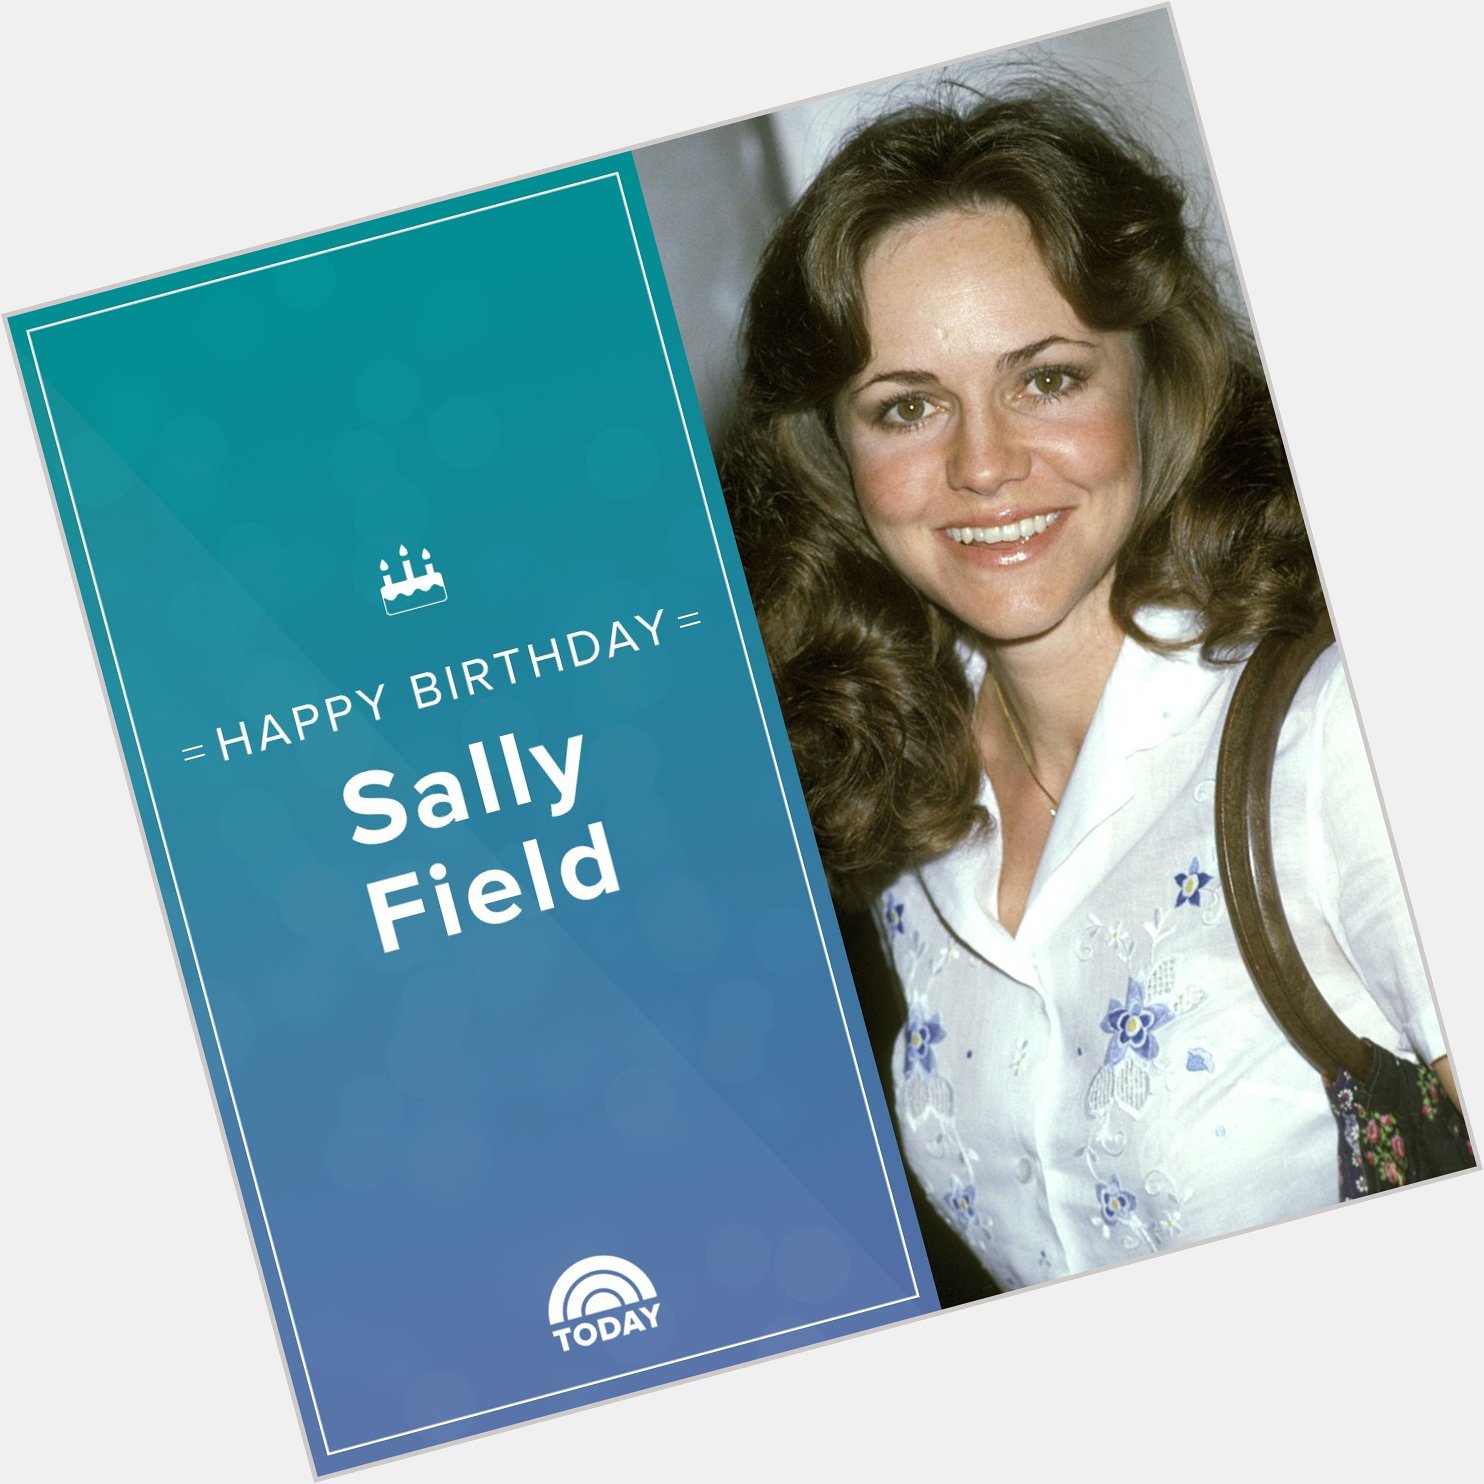 Happy birthday, Sally Field! 